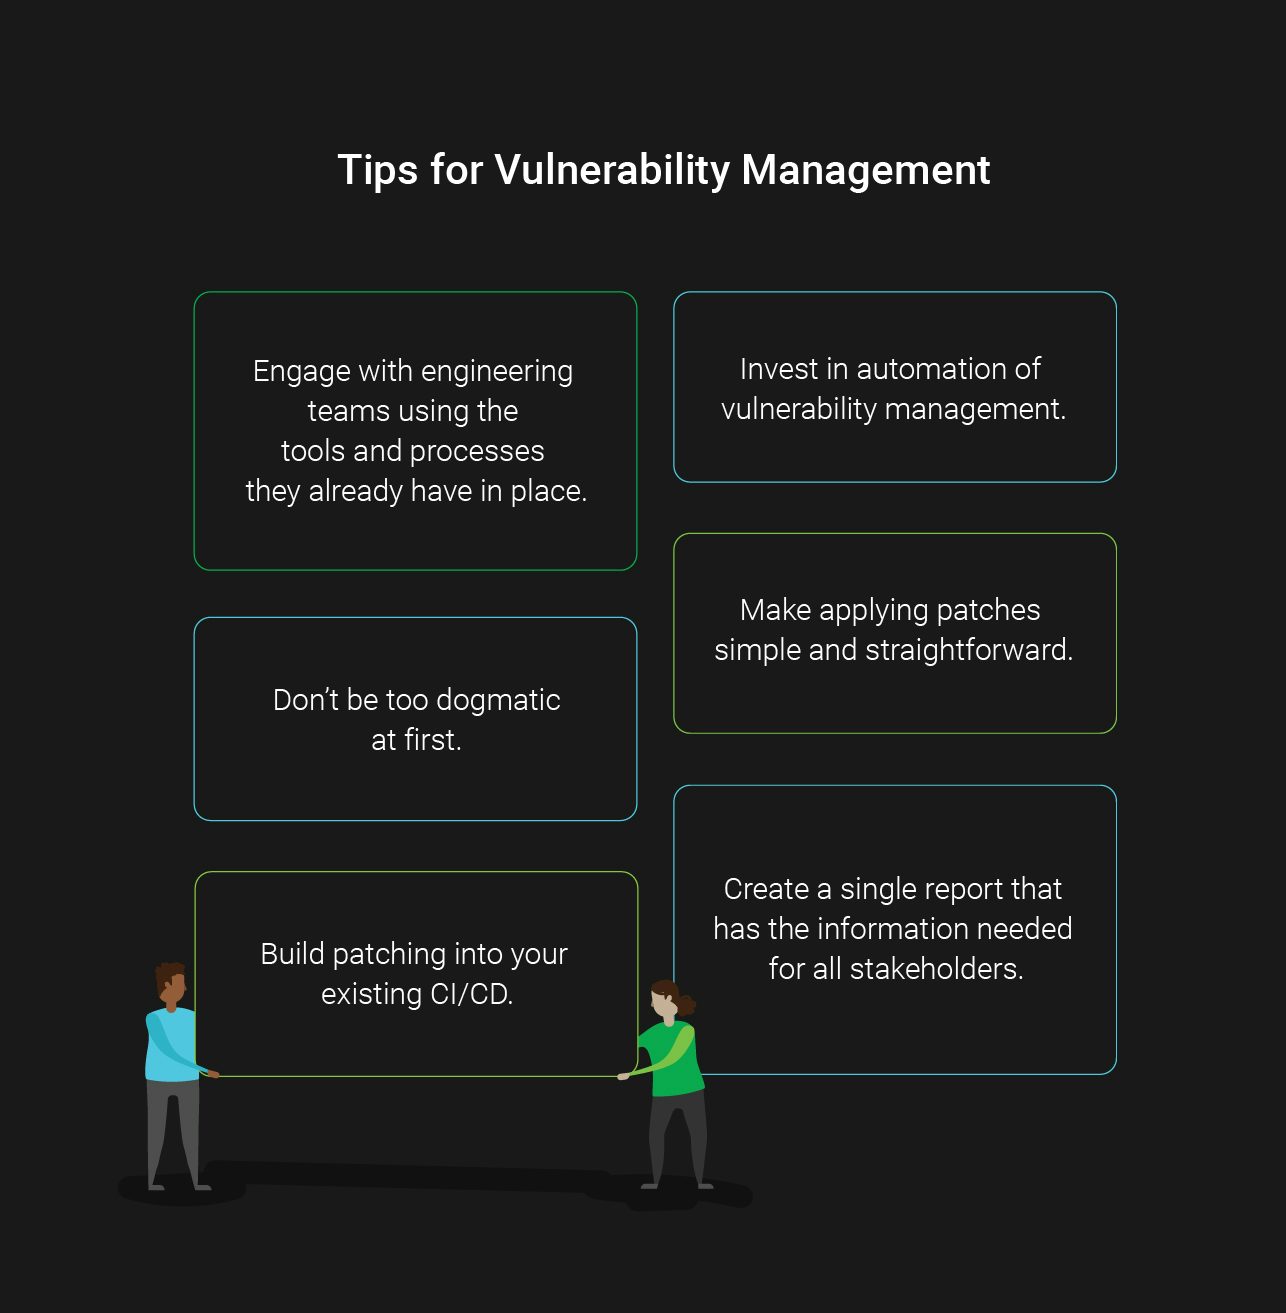 Tips for vulnerability management